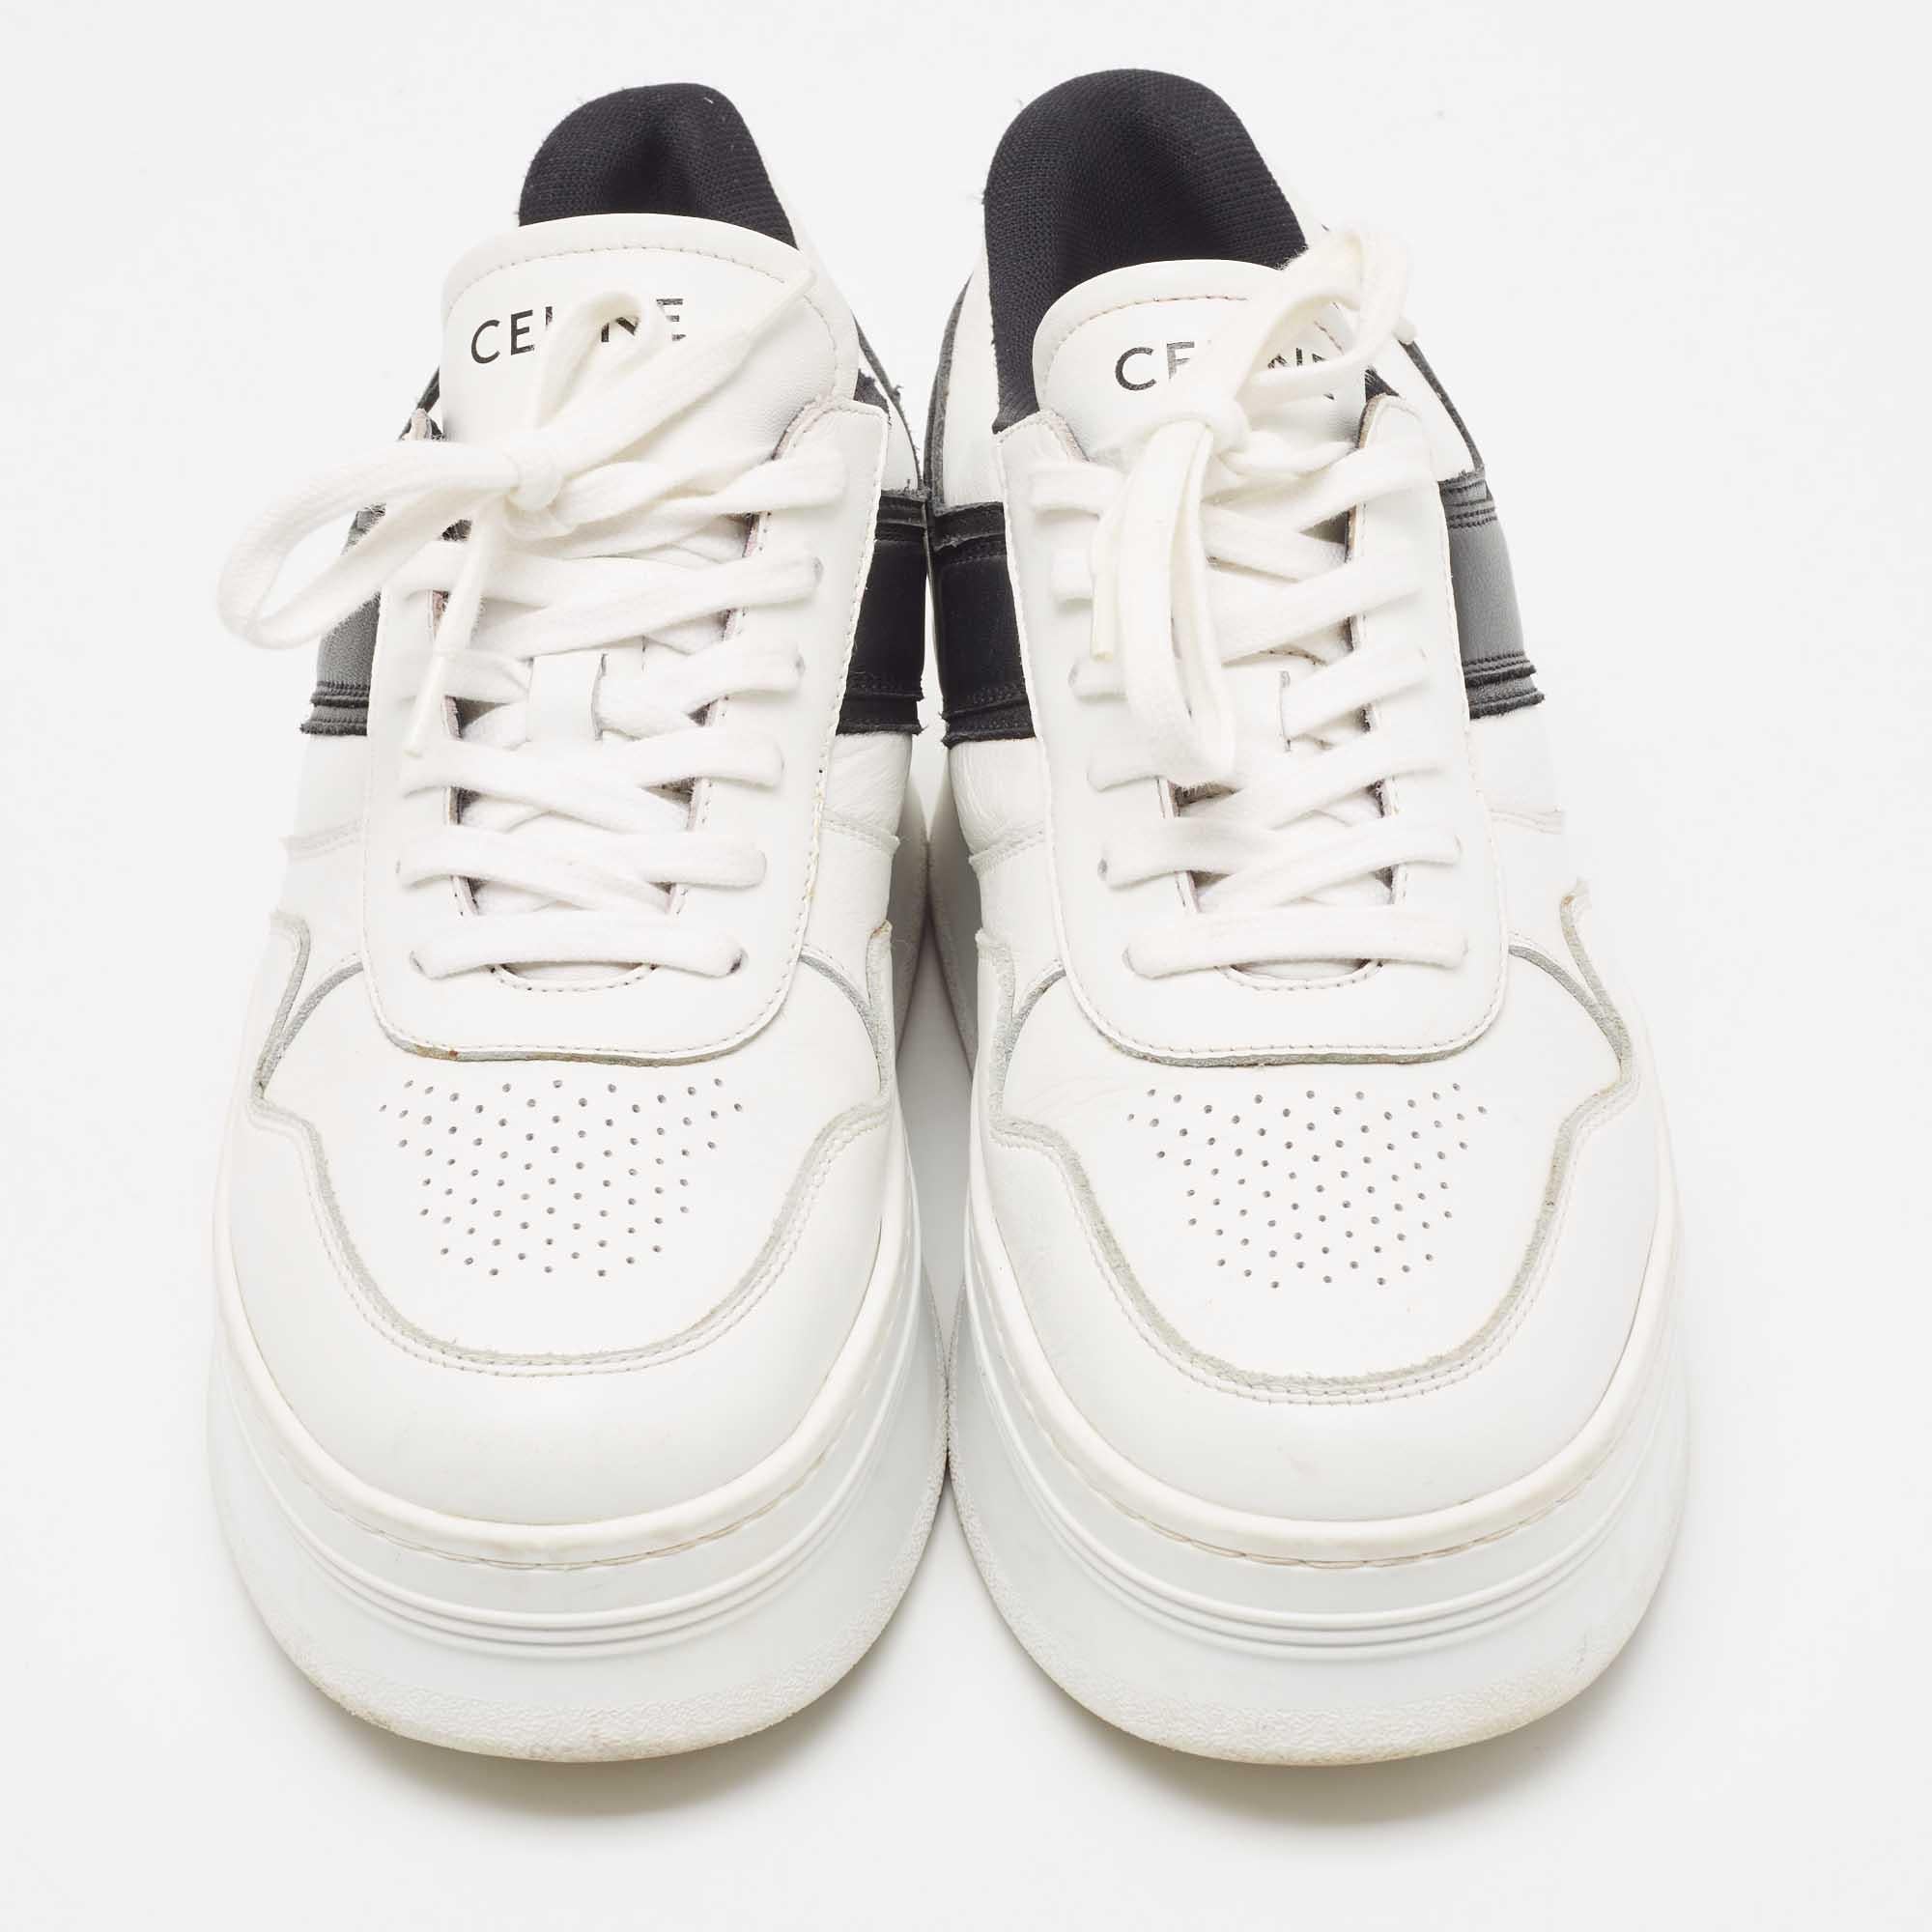 Women's Celine White/Black Leather Block Platform Sneakers Size 39